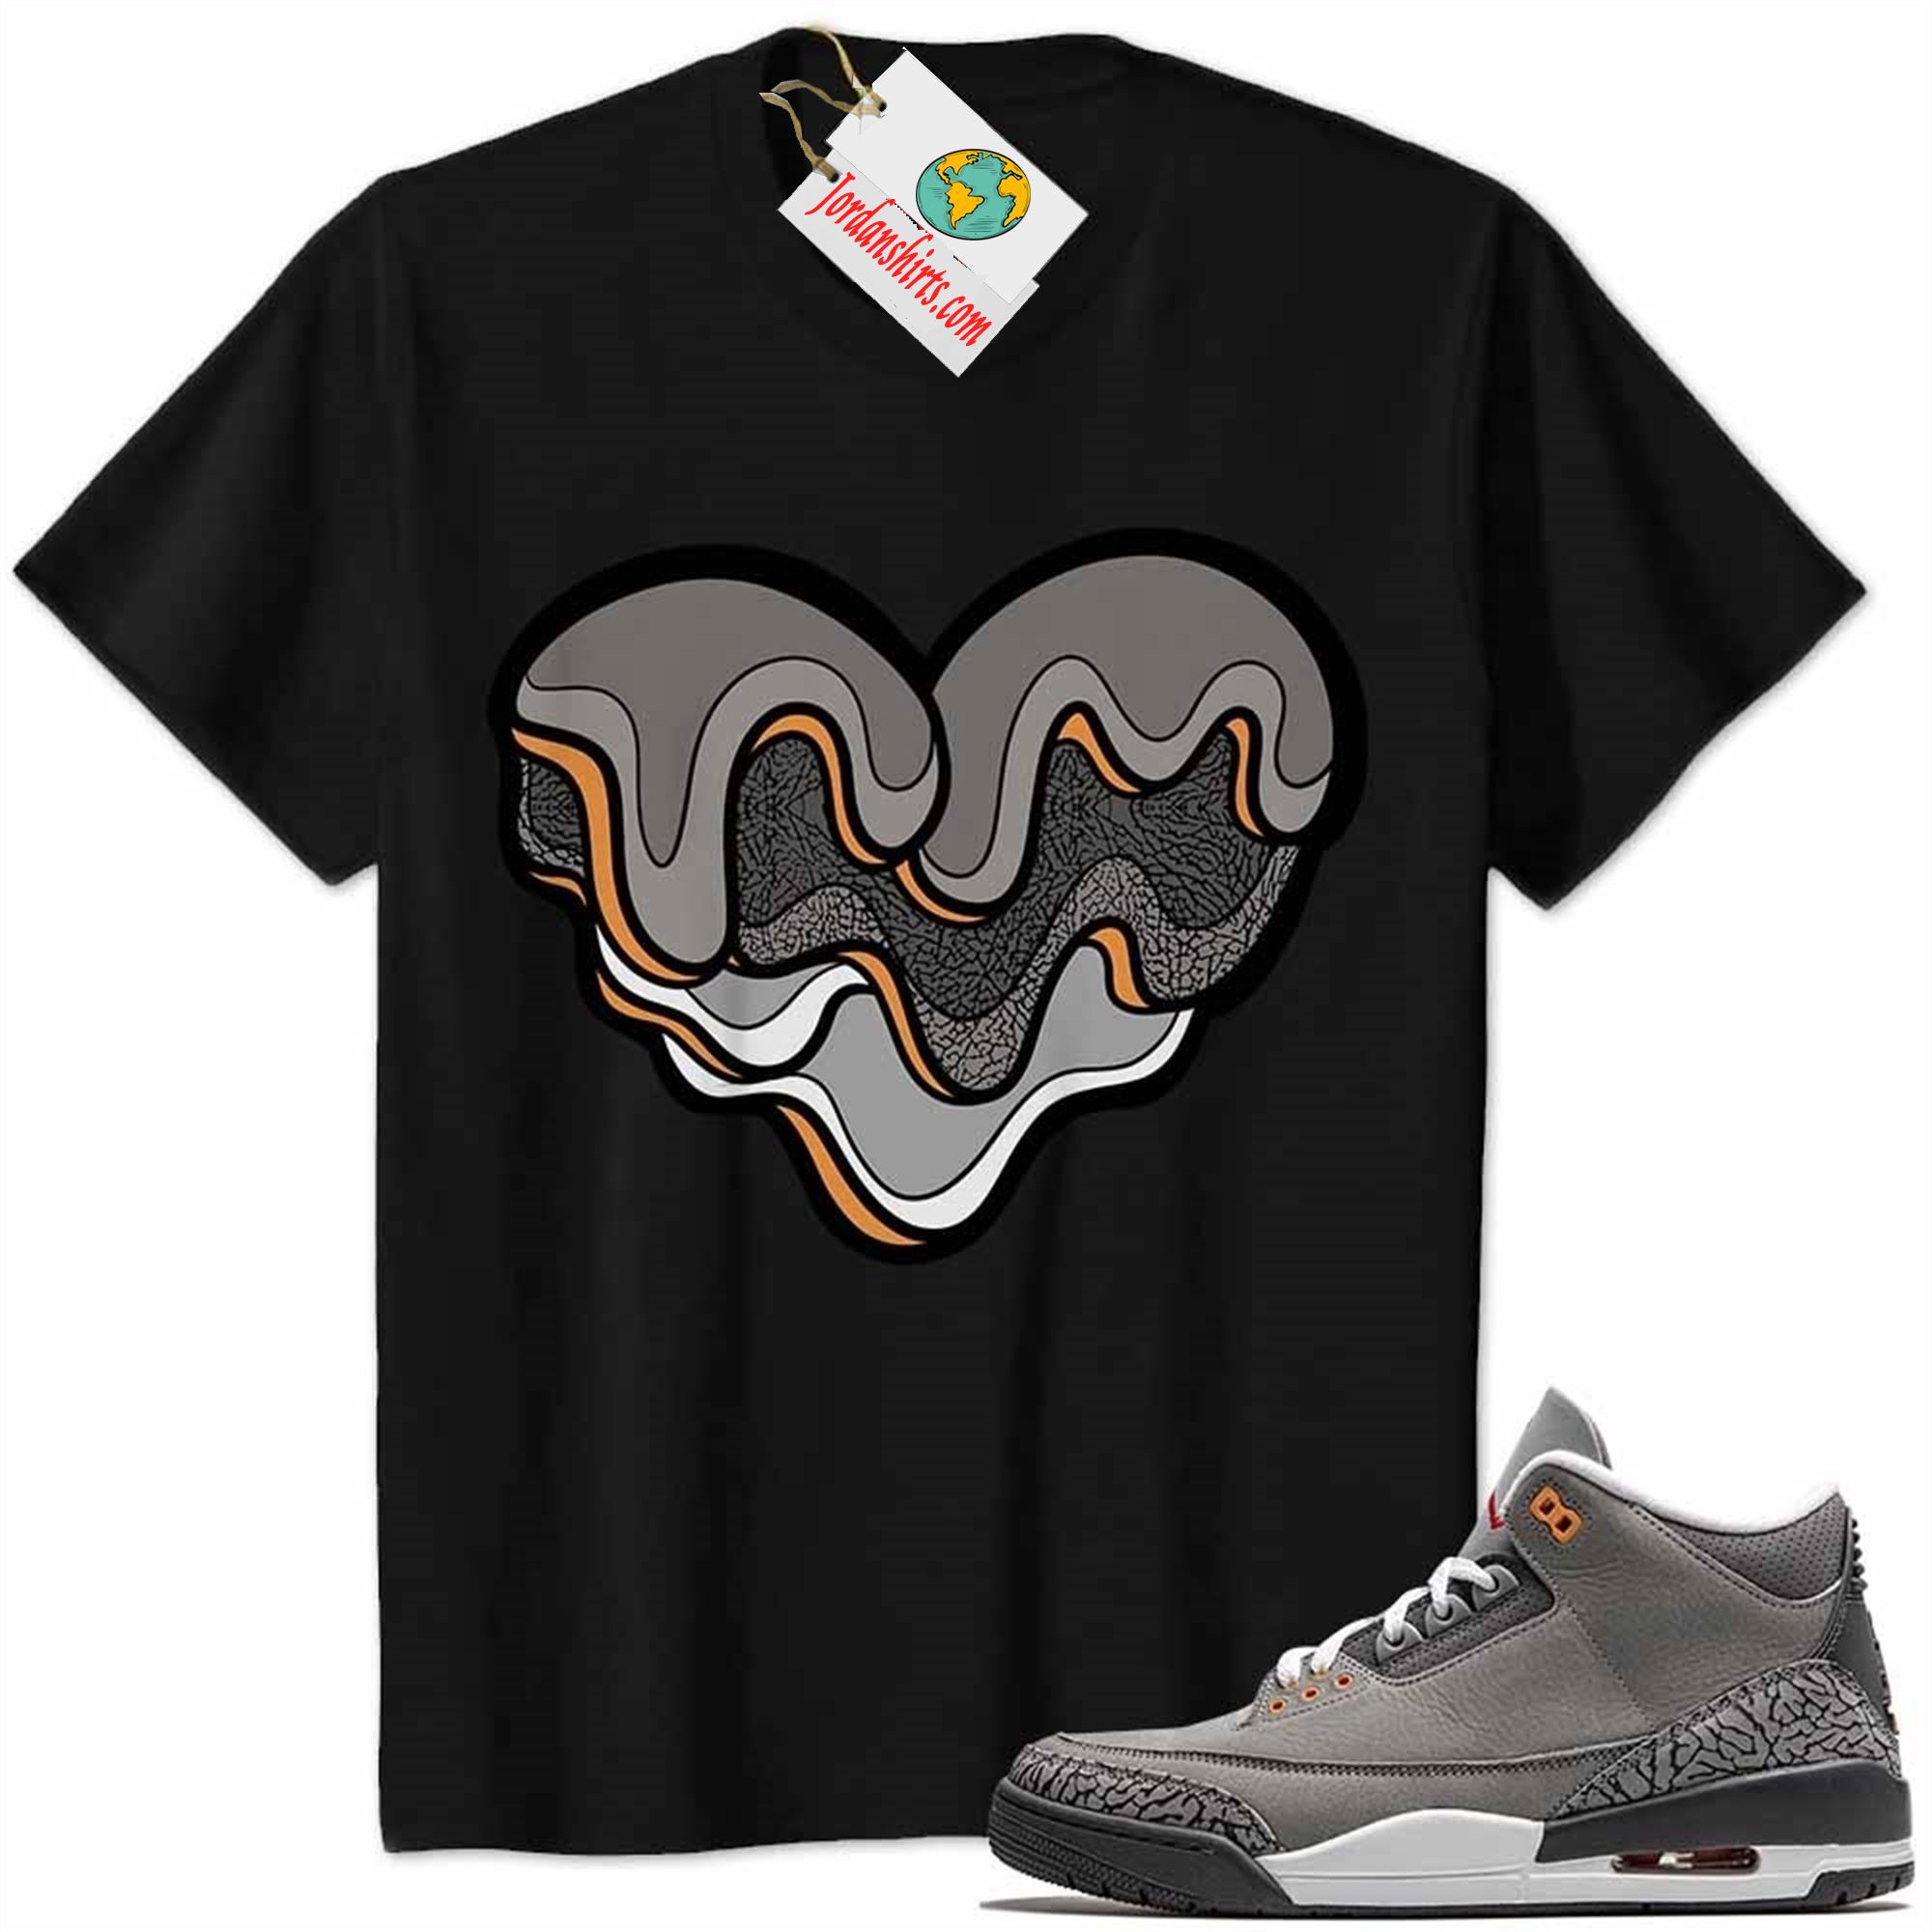 Jordan 3 Shirt, Melt Dripping Heart Black Air Jordan 3 Cool Grey 3s Size Up To 5xl